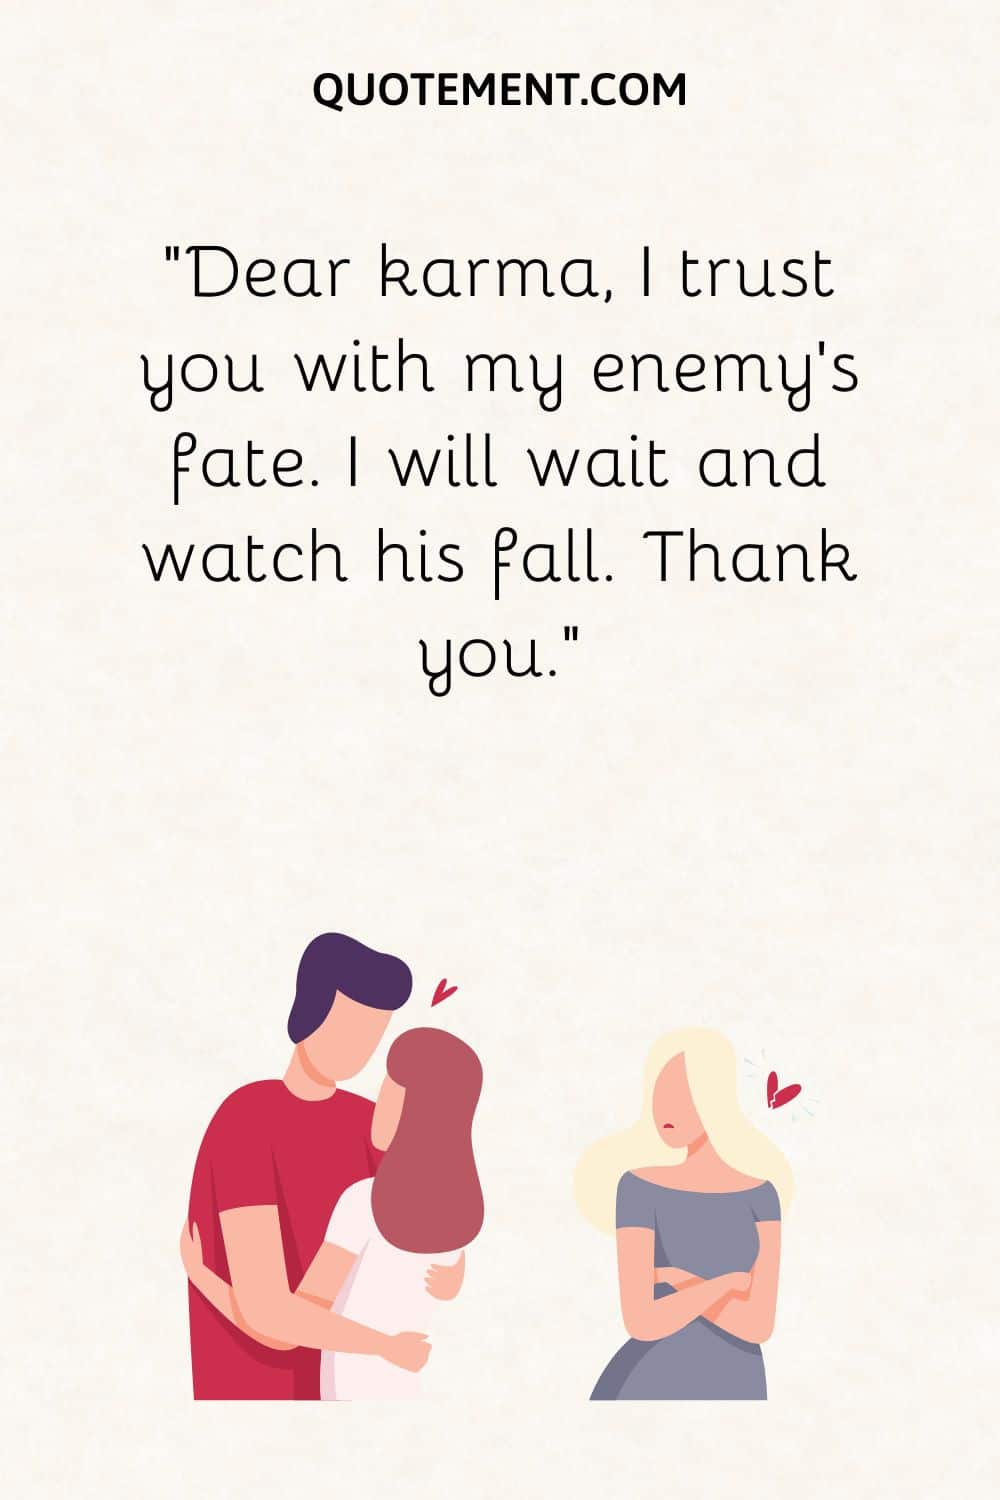 Dear karma, I trust you with my enemy’s fate